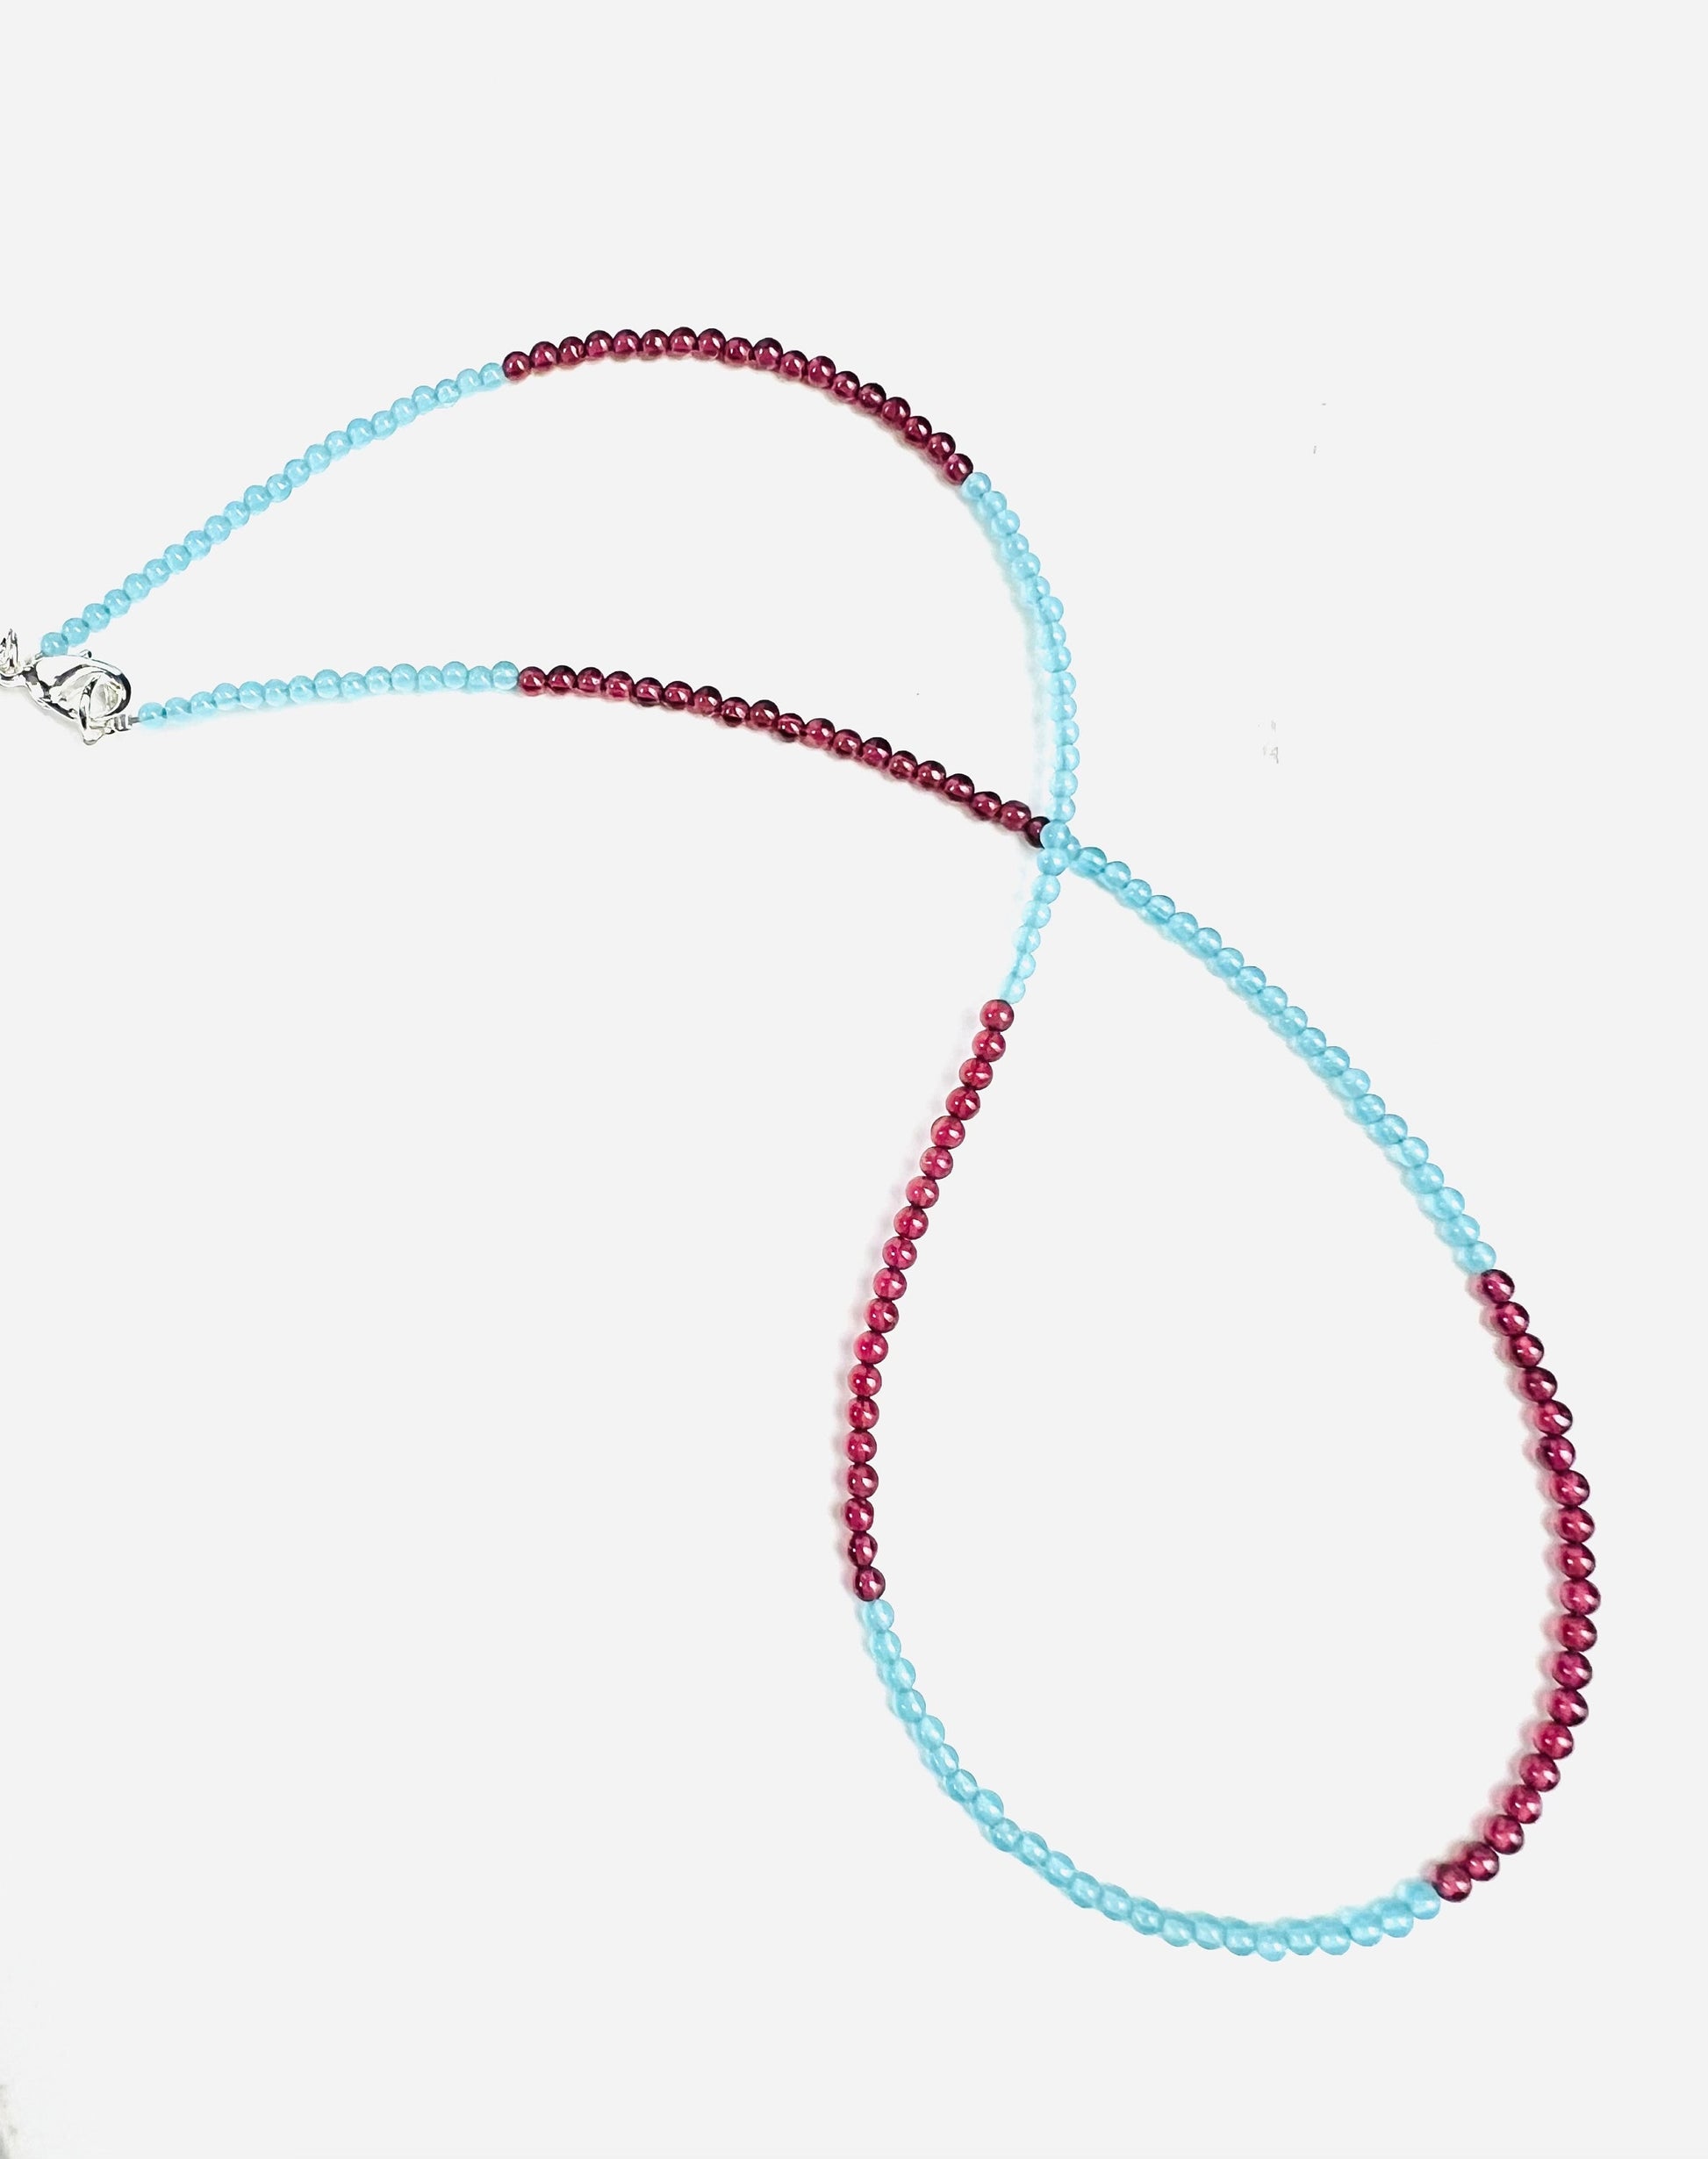 Garnet and Aquamarine 2.5mm smooth round necklace. Chocker layering minimalist gift January and March birthstone